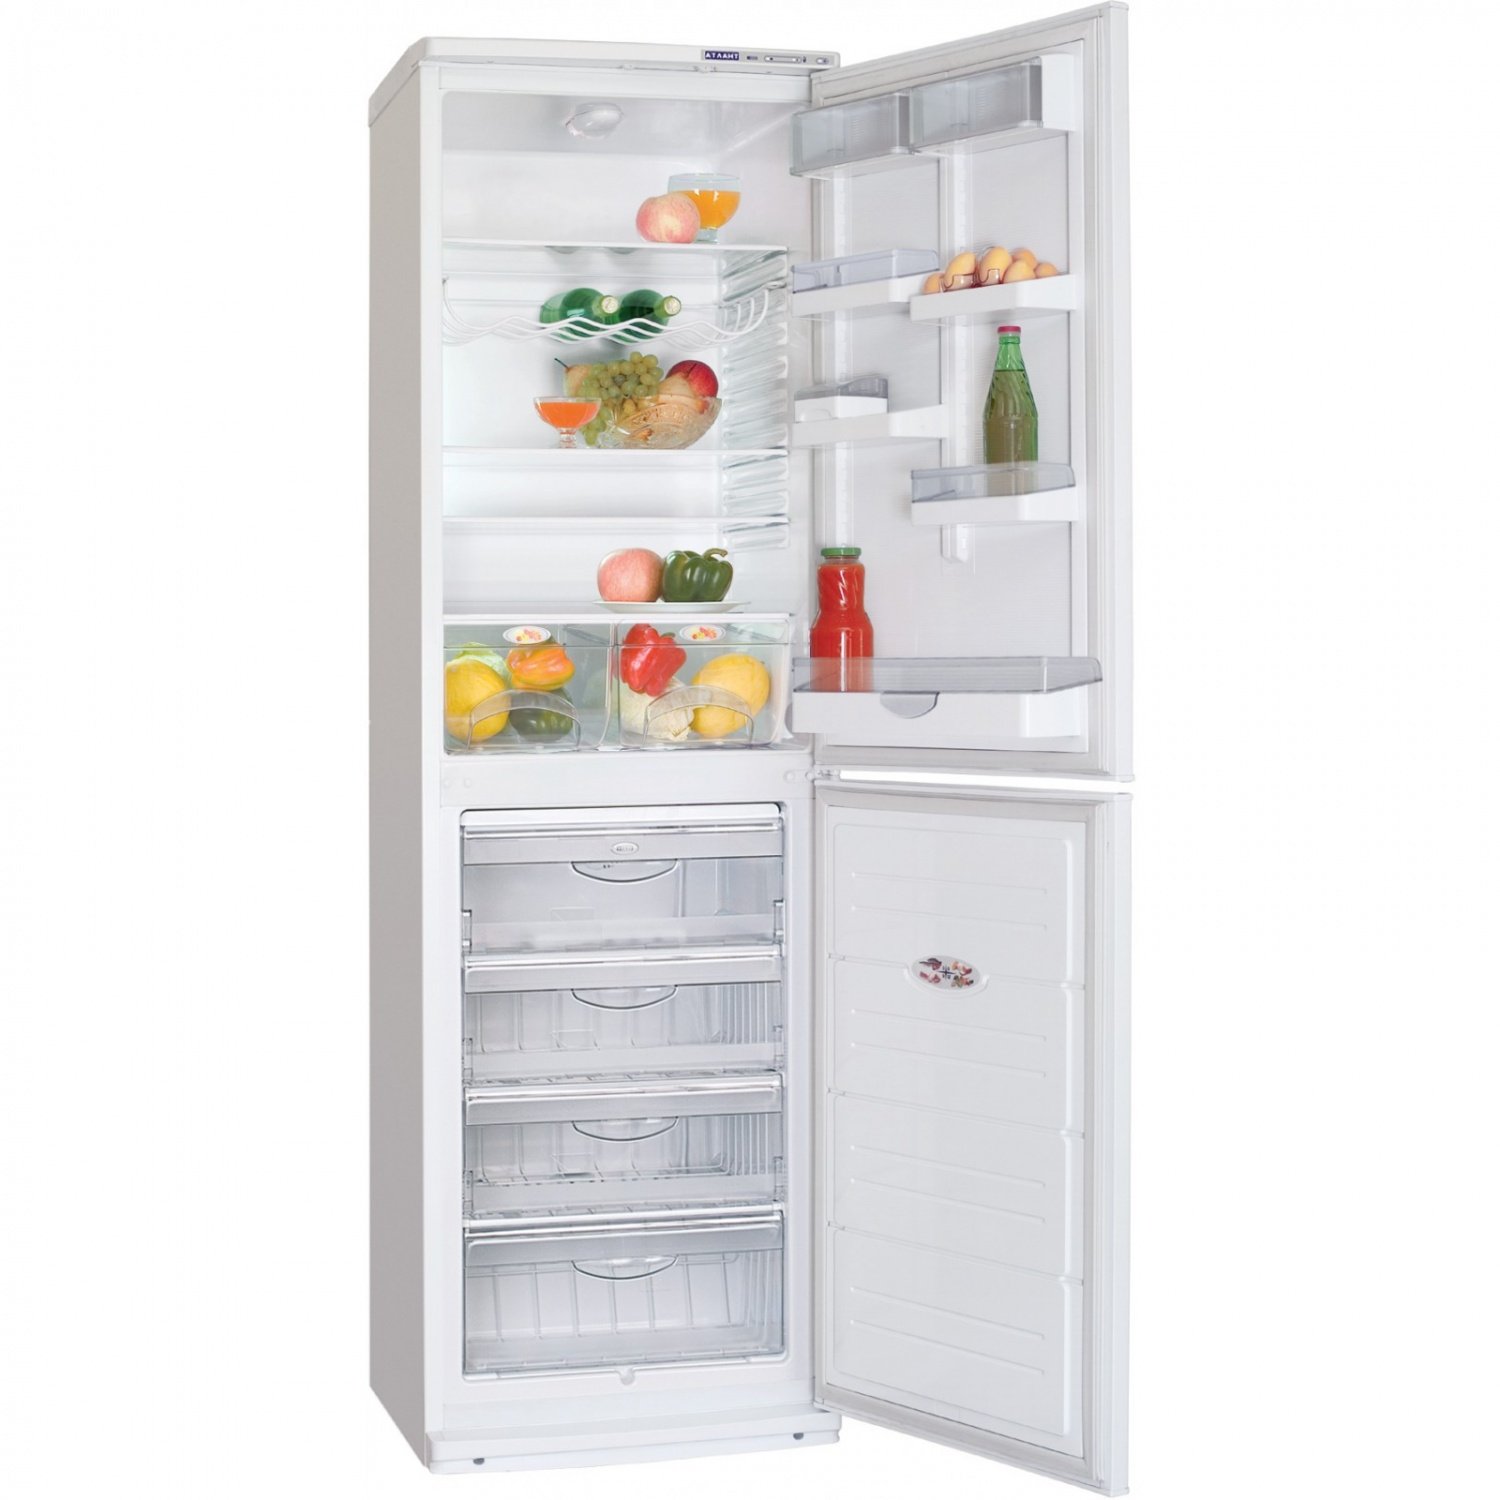 Холодильник для встройки в шкаф